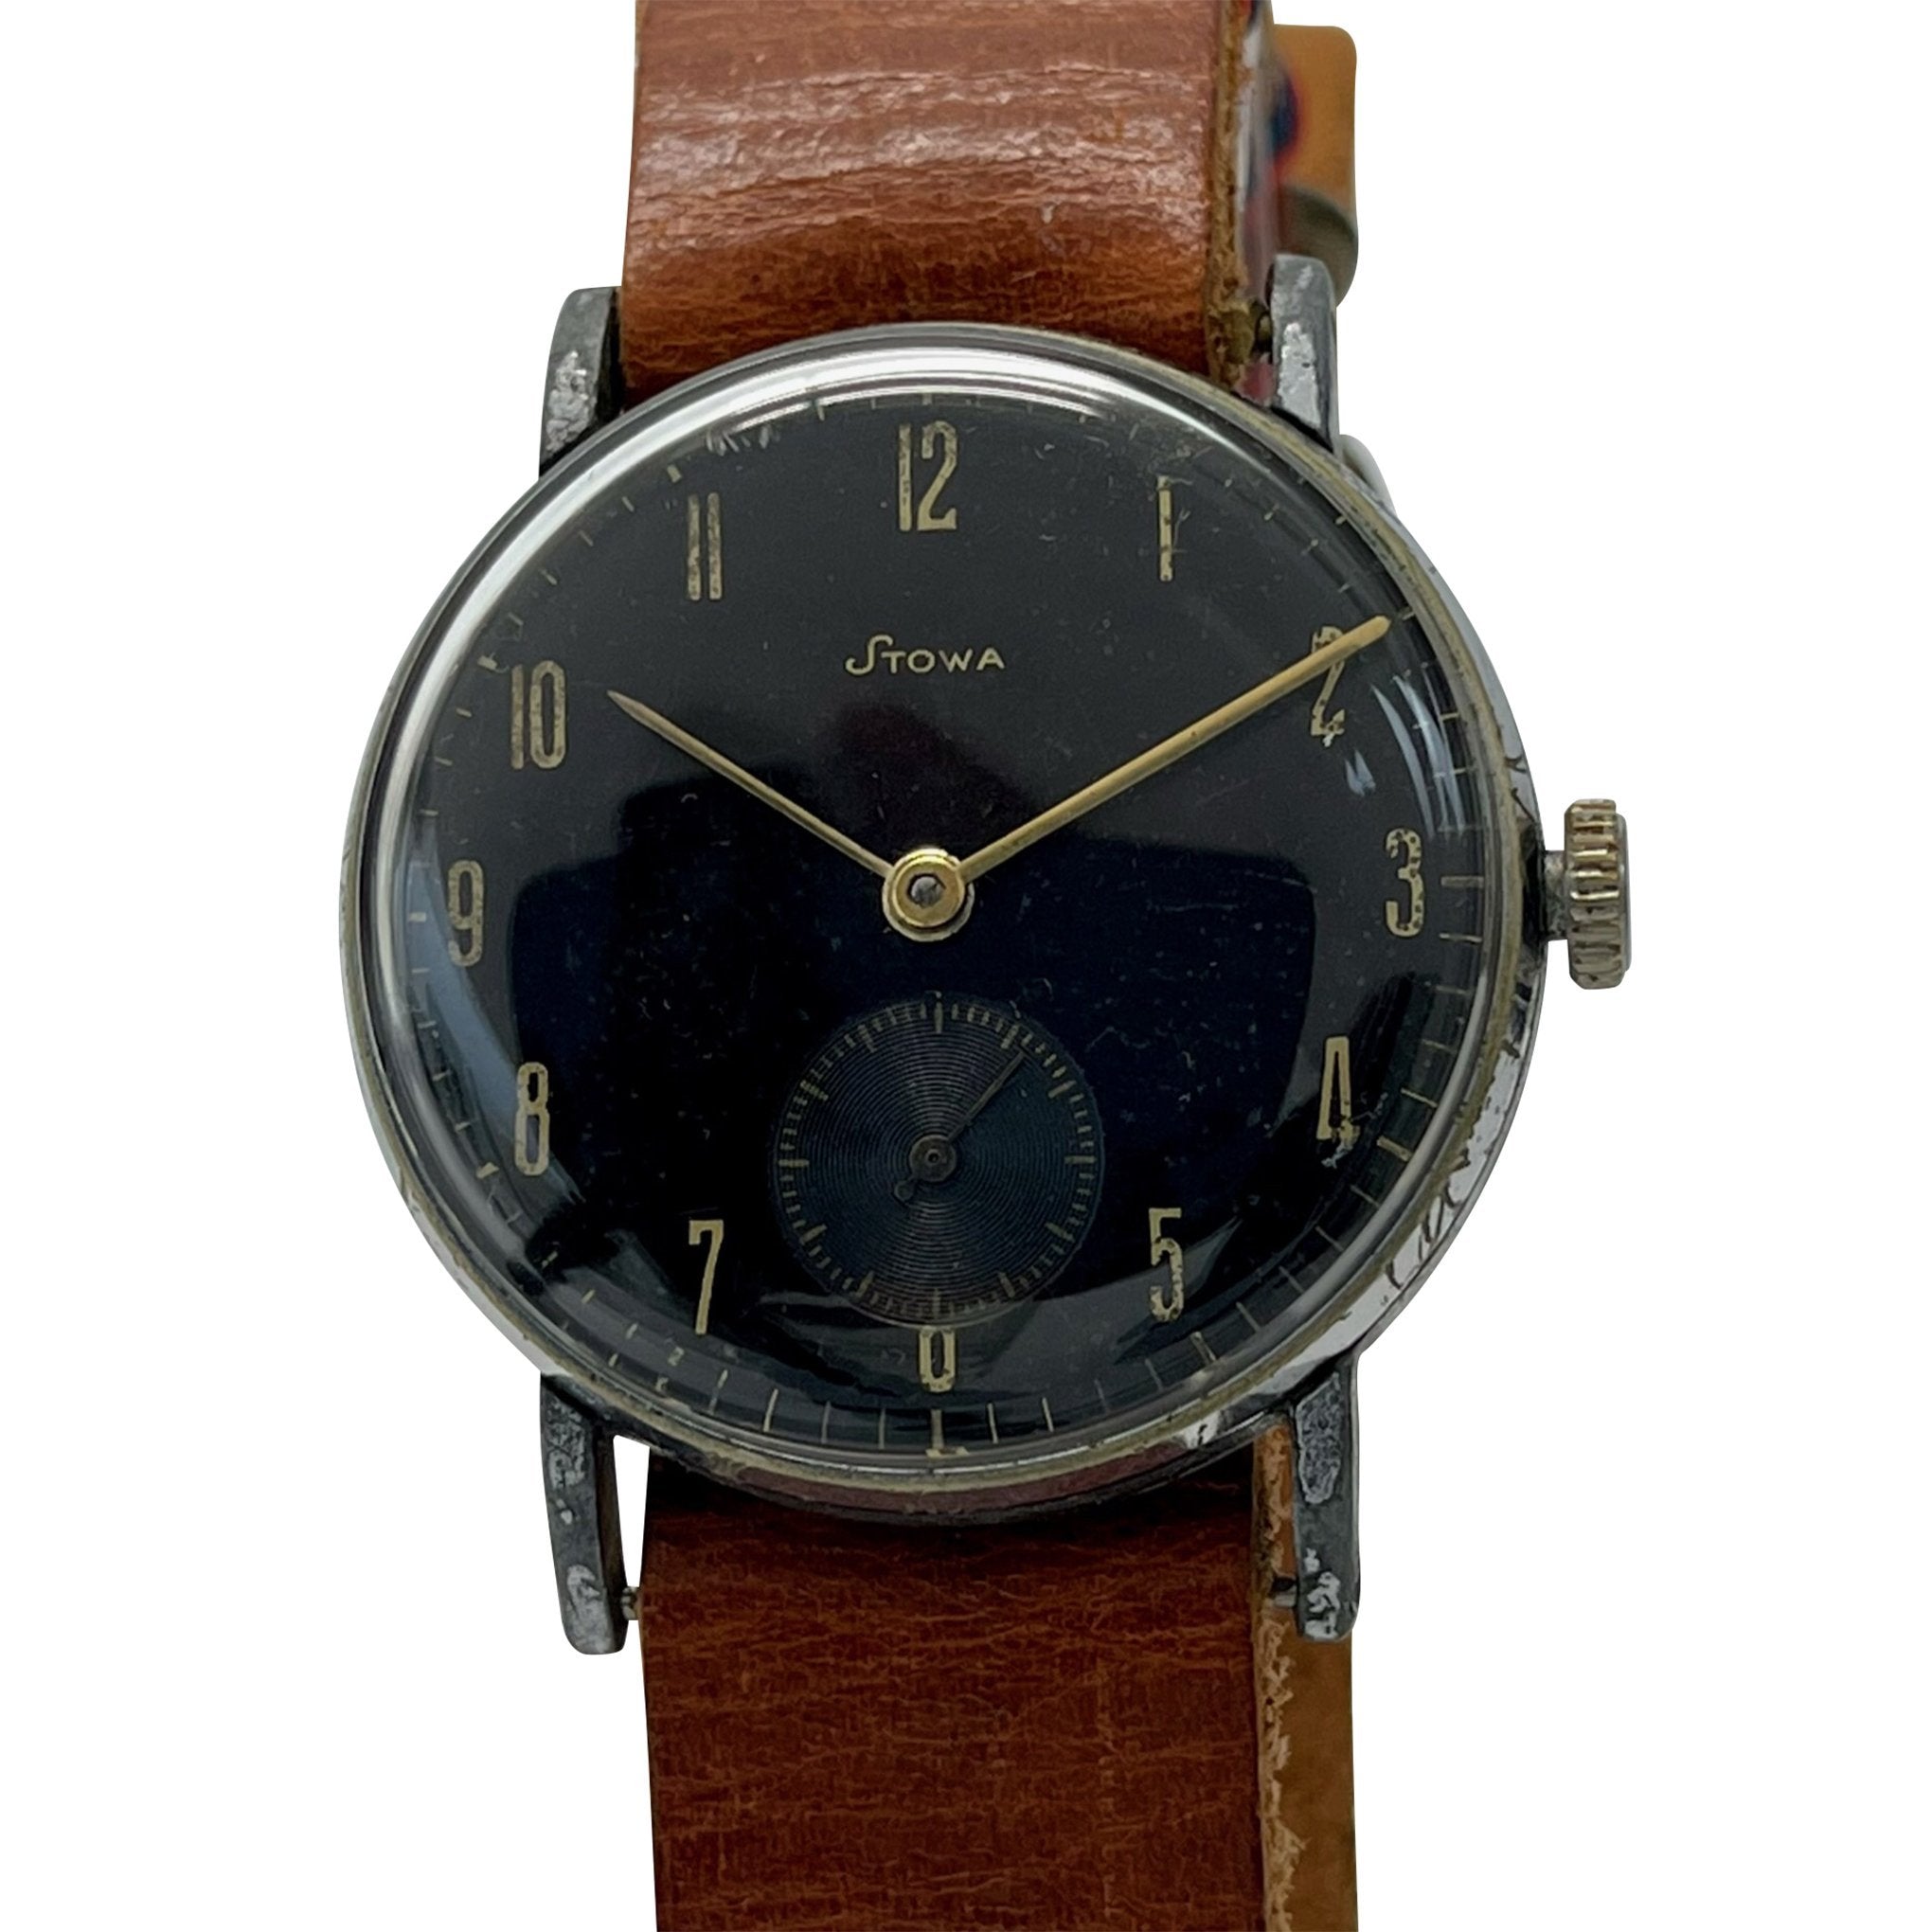 Stowa Bauhaus Sub Second - Counting Time Watch Purveyors